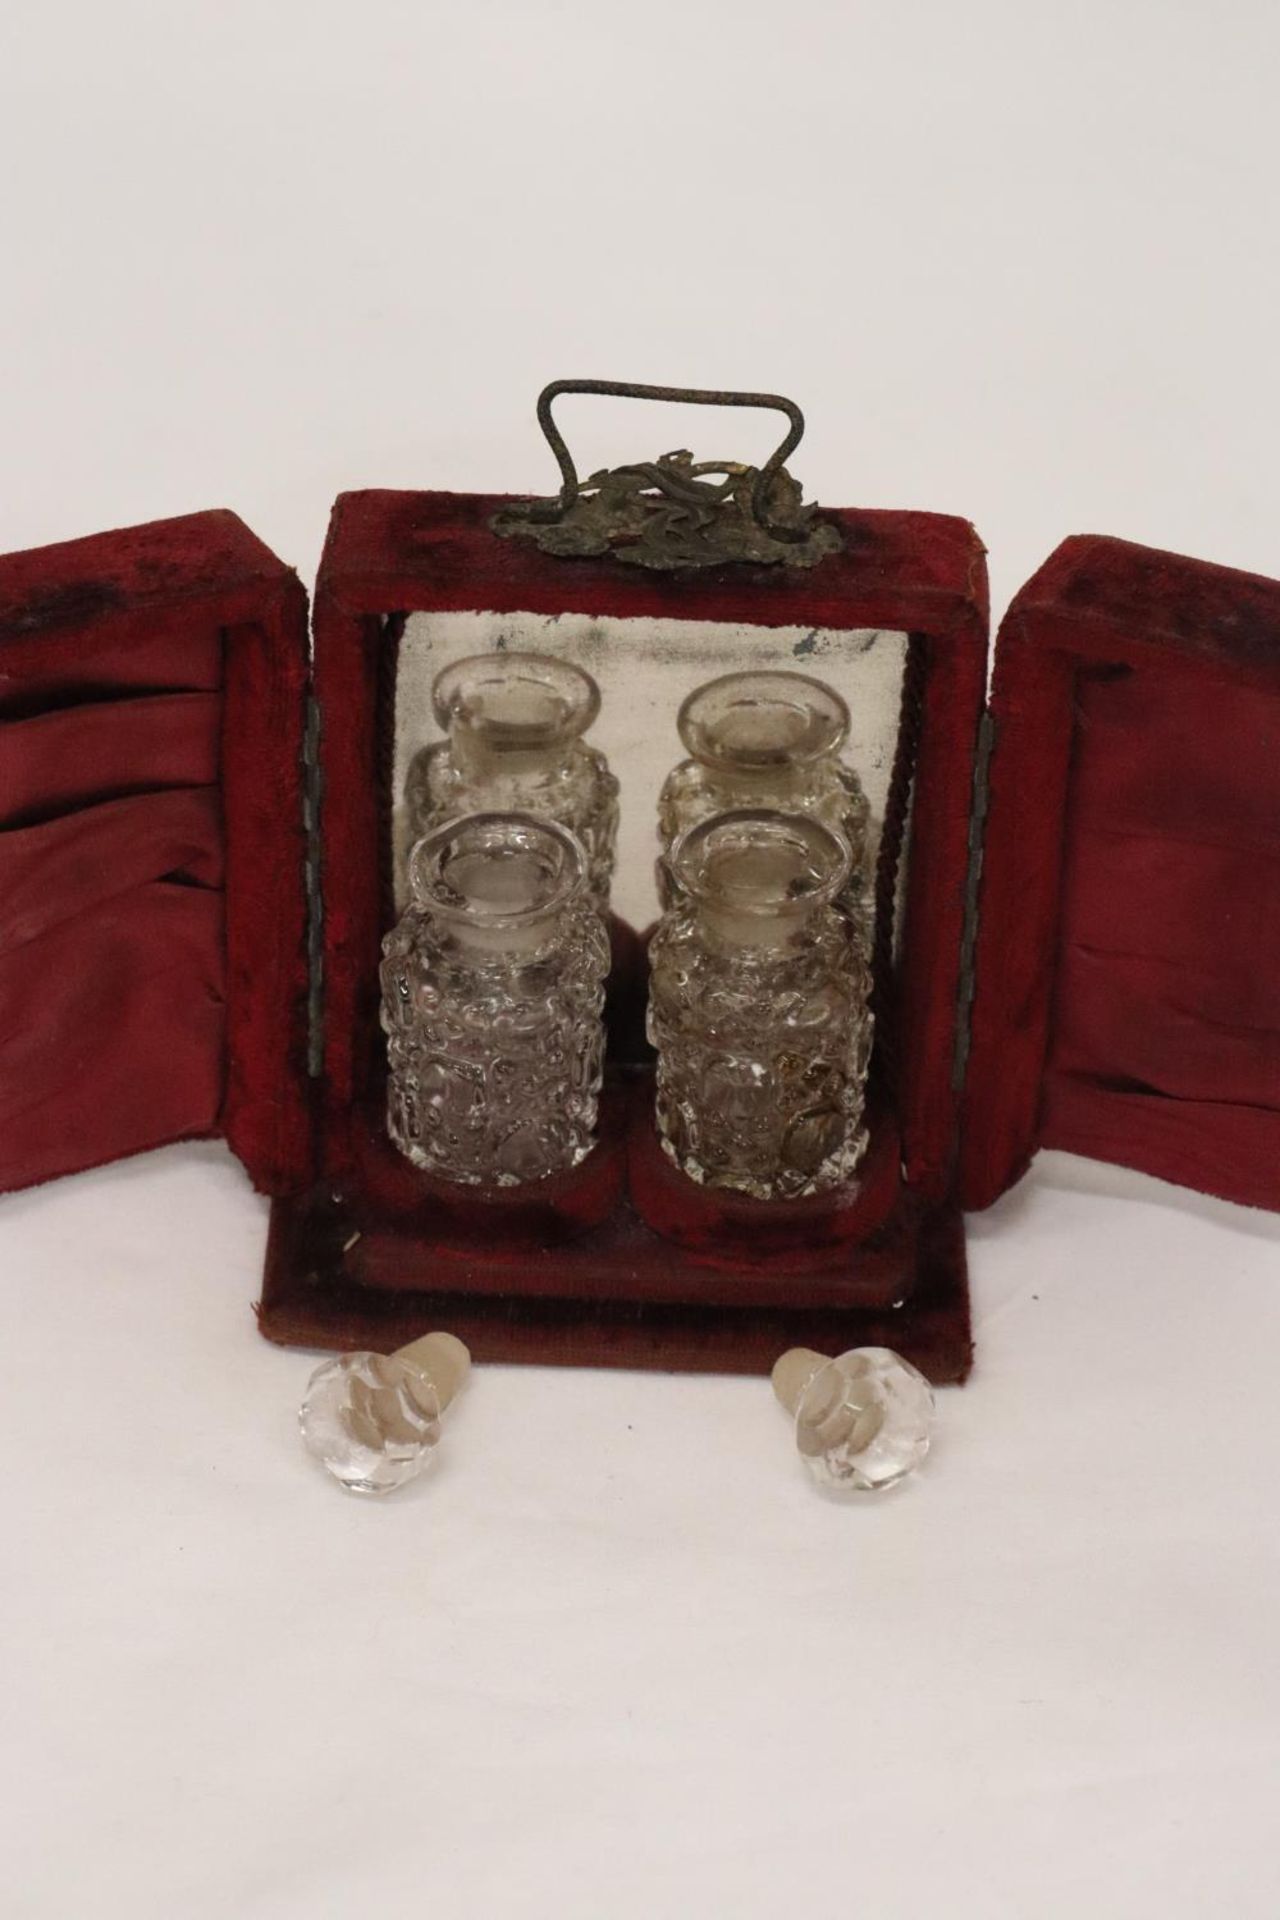 TWO PERFUME BOTTLES IN ORIGINAL PRESENTATON CASE OF CRUSHED VELVET - Image 3 of 4